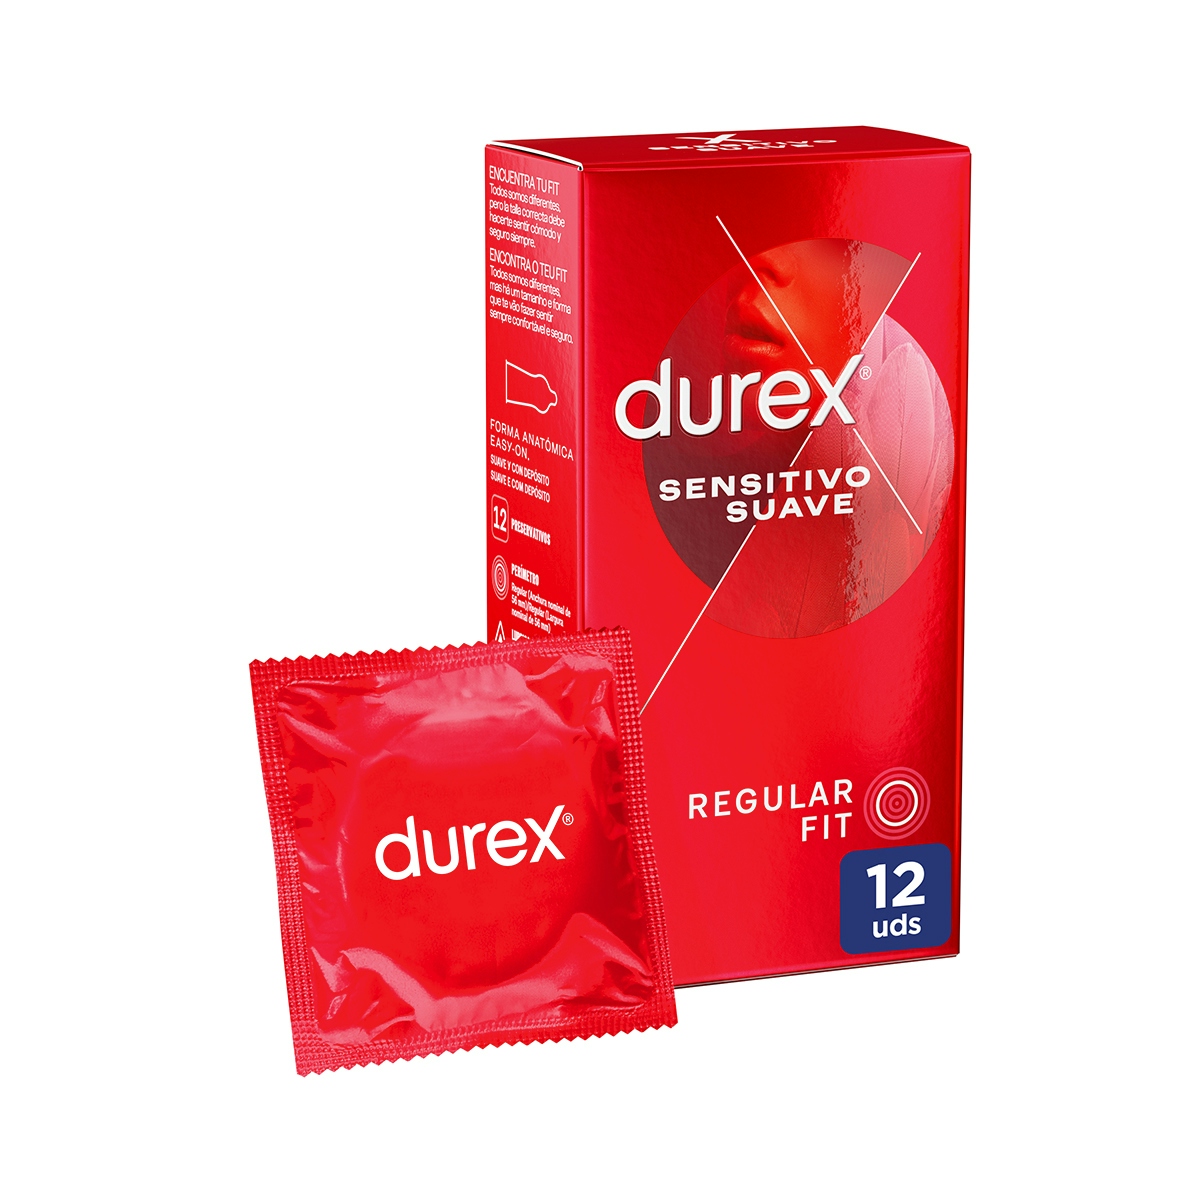 Preservativo sensitivo DUREX 12 uds